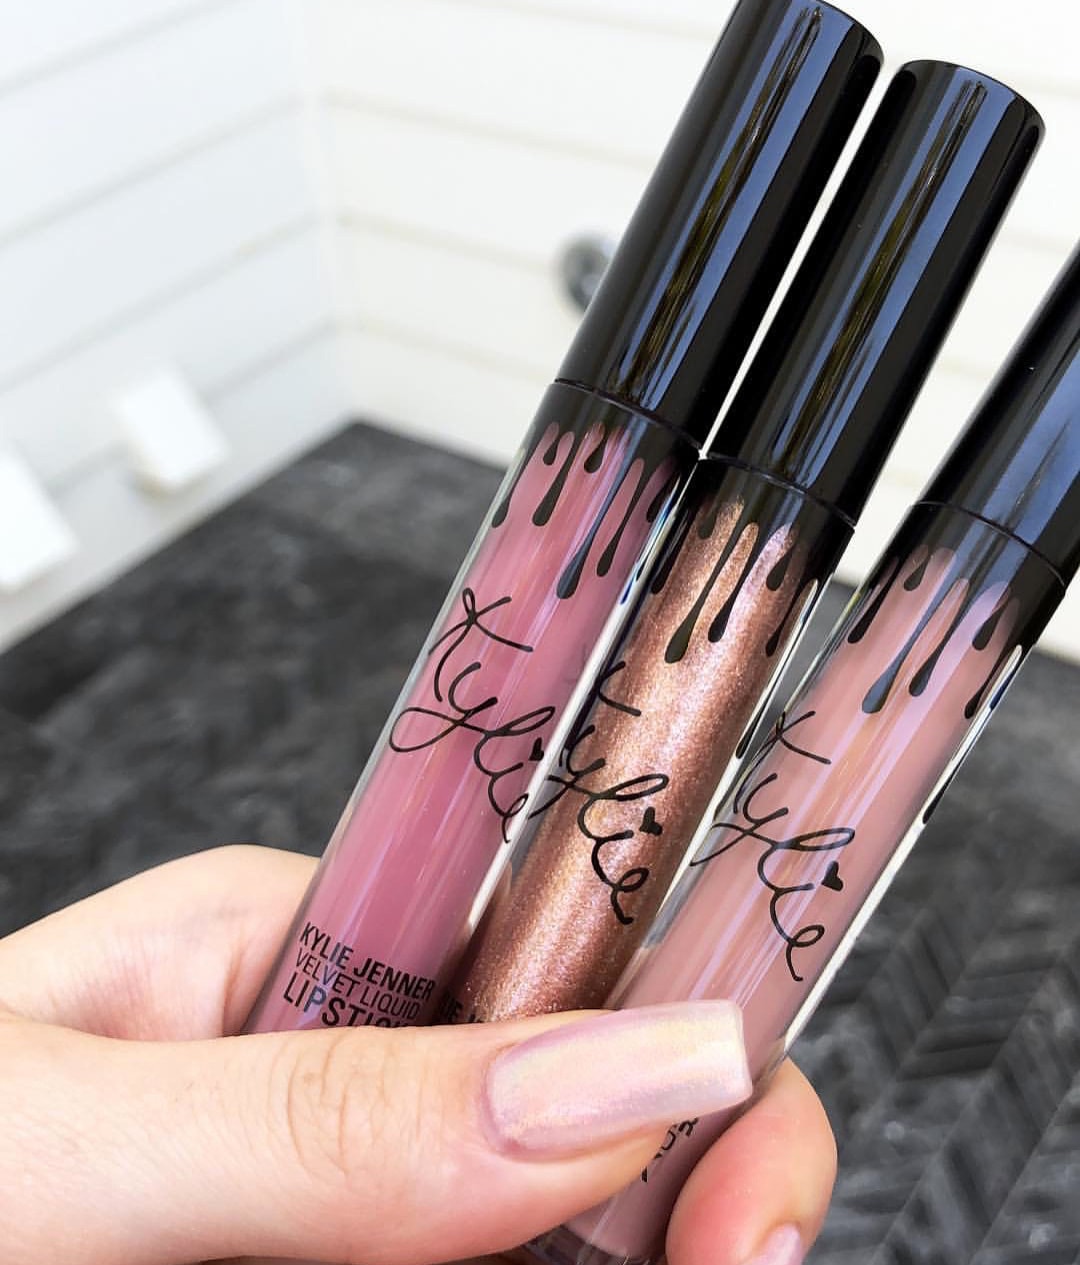 Kylie Jenner Cosmetics "Sorta Sweet" Collection Eyeshadow Palette Lipsticks Makeup Beauty Lipstick Gloss Color